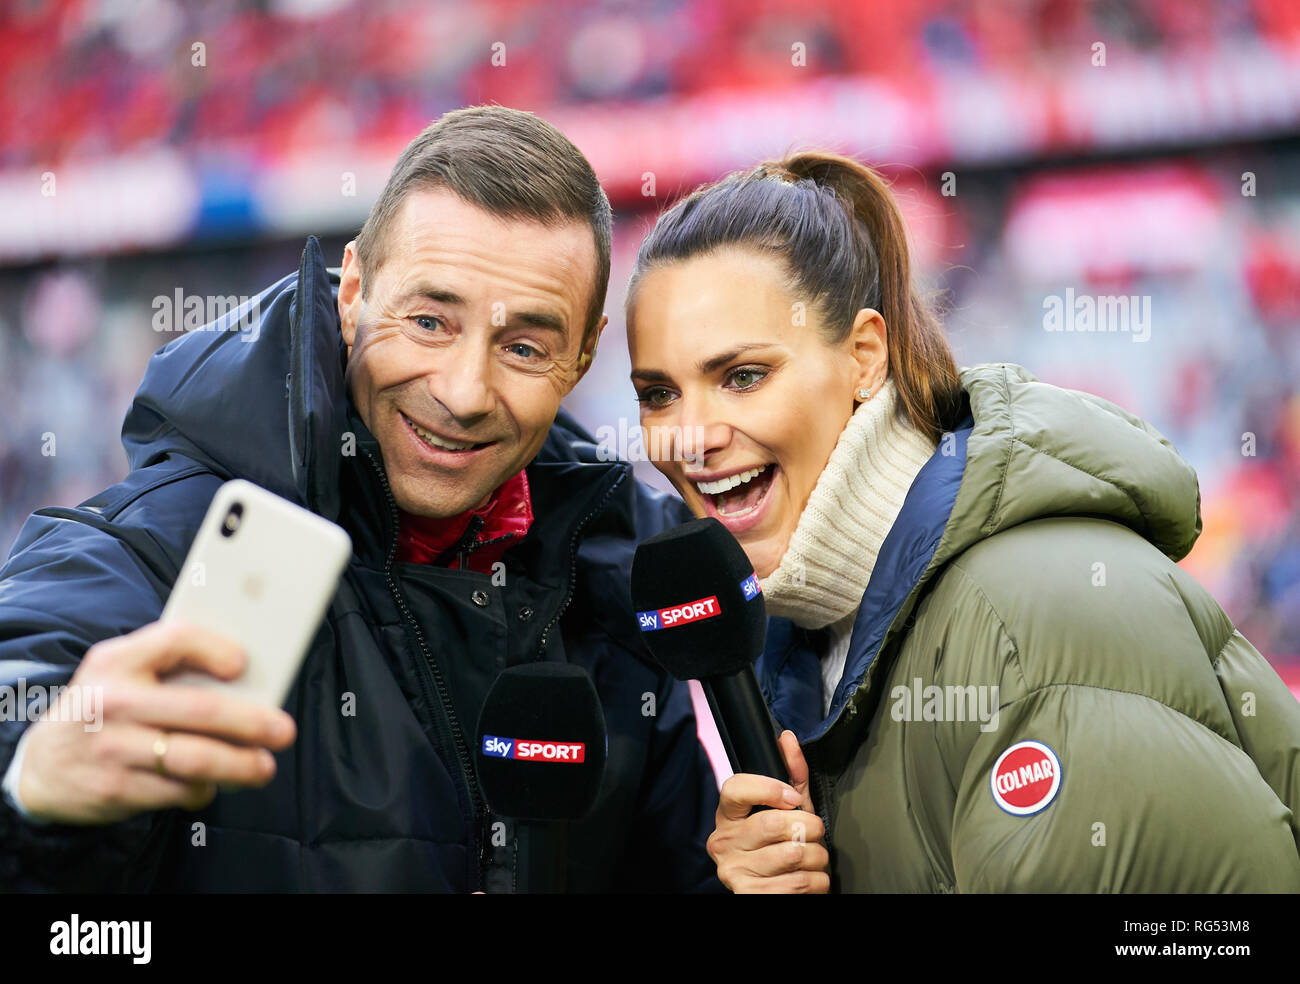 Kai PFLAUME, TV presenter with Esther Sedlaczek, Sky sports presenter  Selfie FC BAYERN MUNICH - VFB STUTTGART 4-1 - DFL REGULATIONS PROHIBIT ANY  USE OF PHOTOGRAPHS as IMAGE SEQUENCES and/or QUASI-VIDEO -